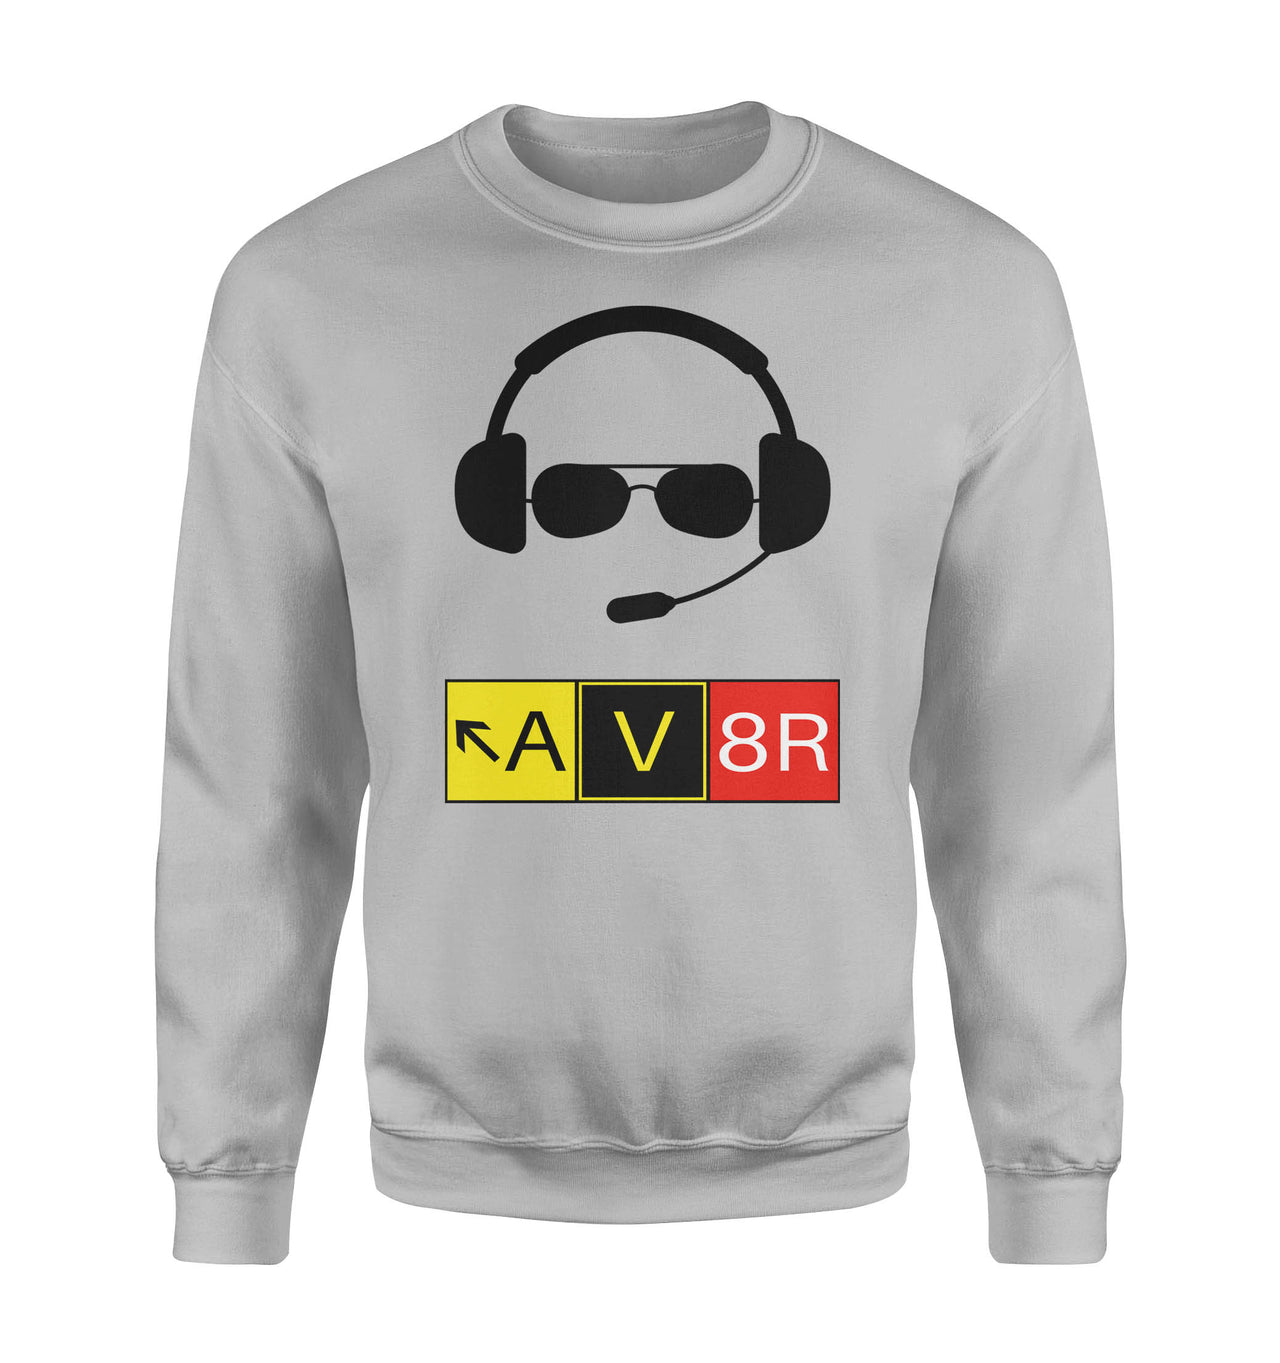 AV8R 2 Designed Sweatshirts